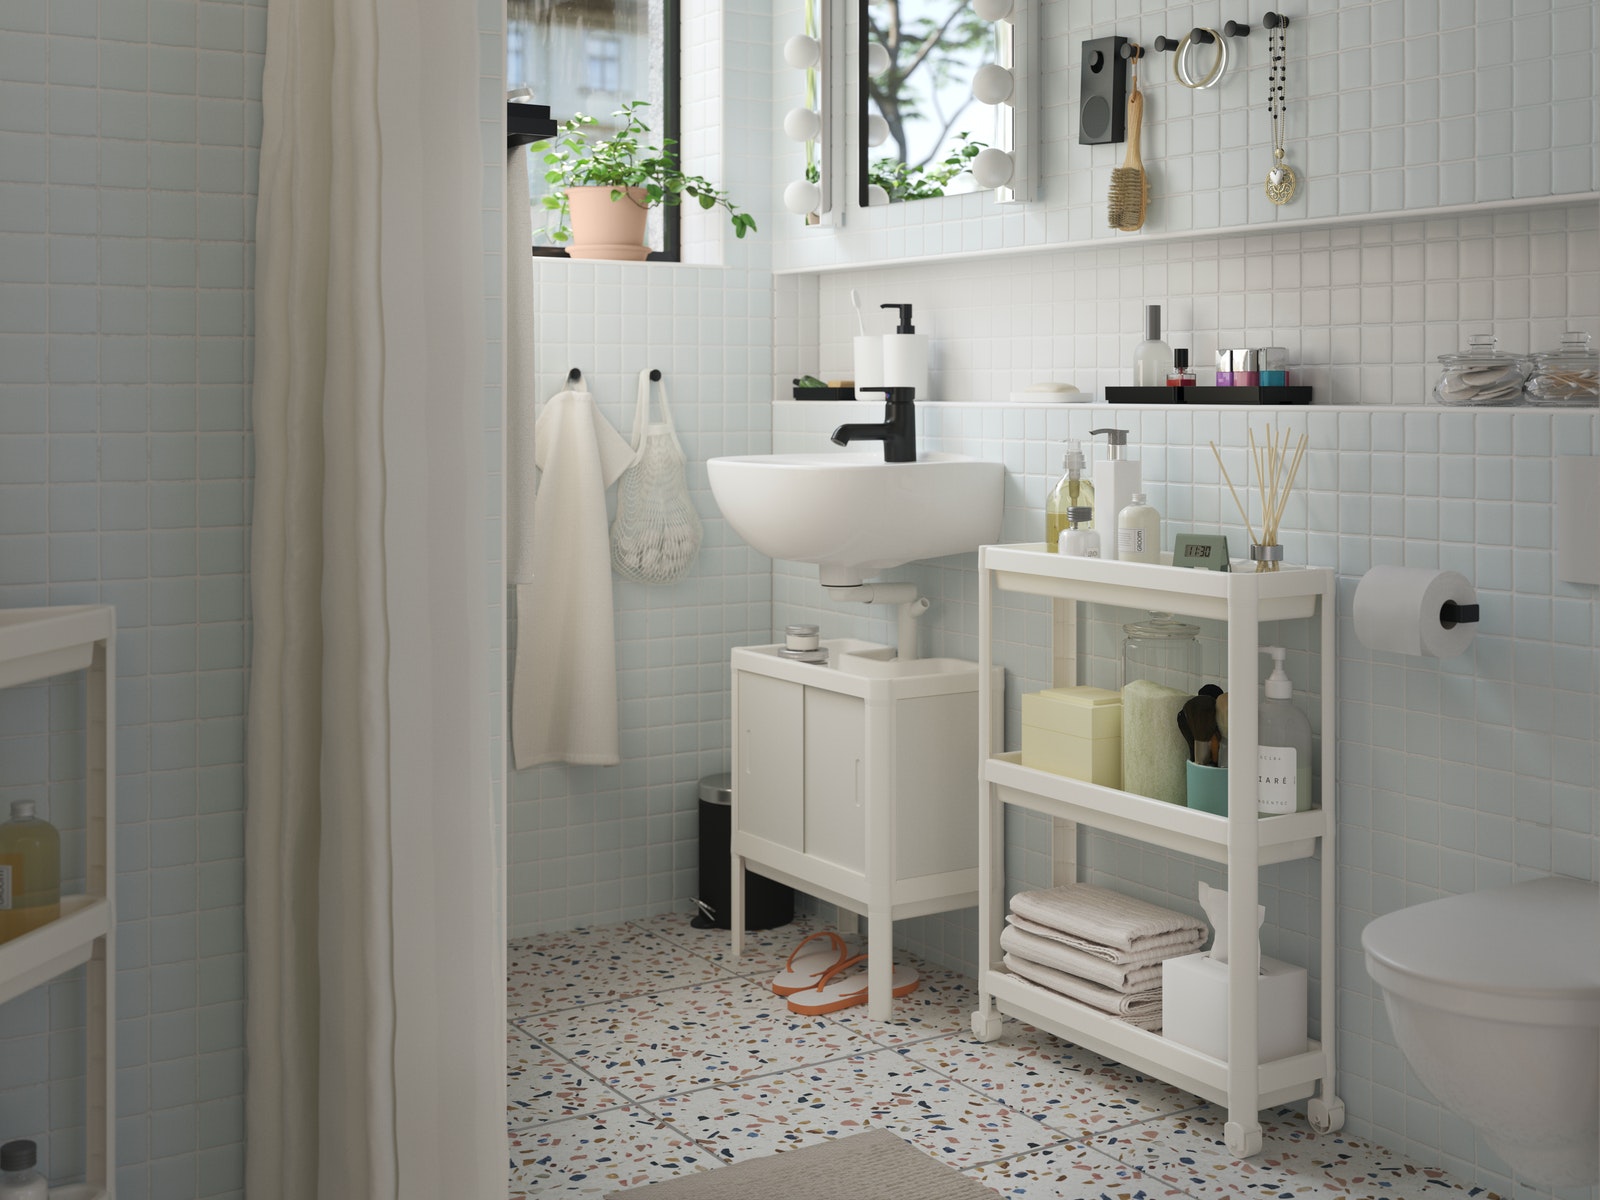 IKEA - Μεγάλες δυνατότητες αποθήκευσης σε ένα μικρό μπάνιο